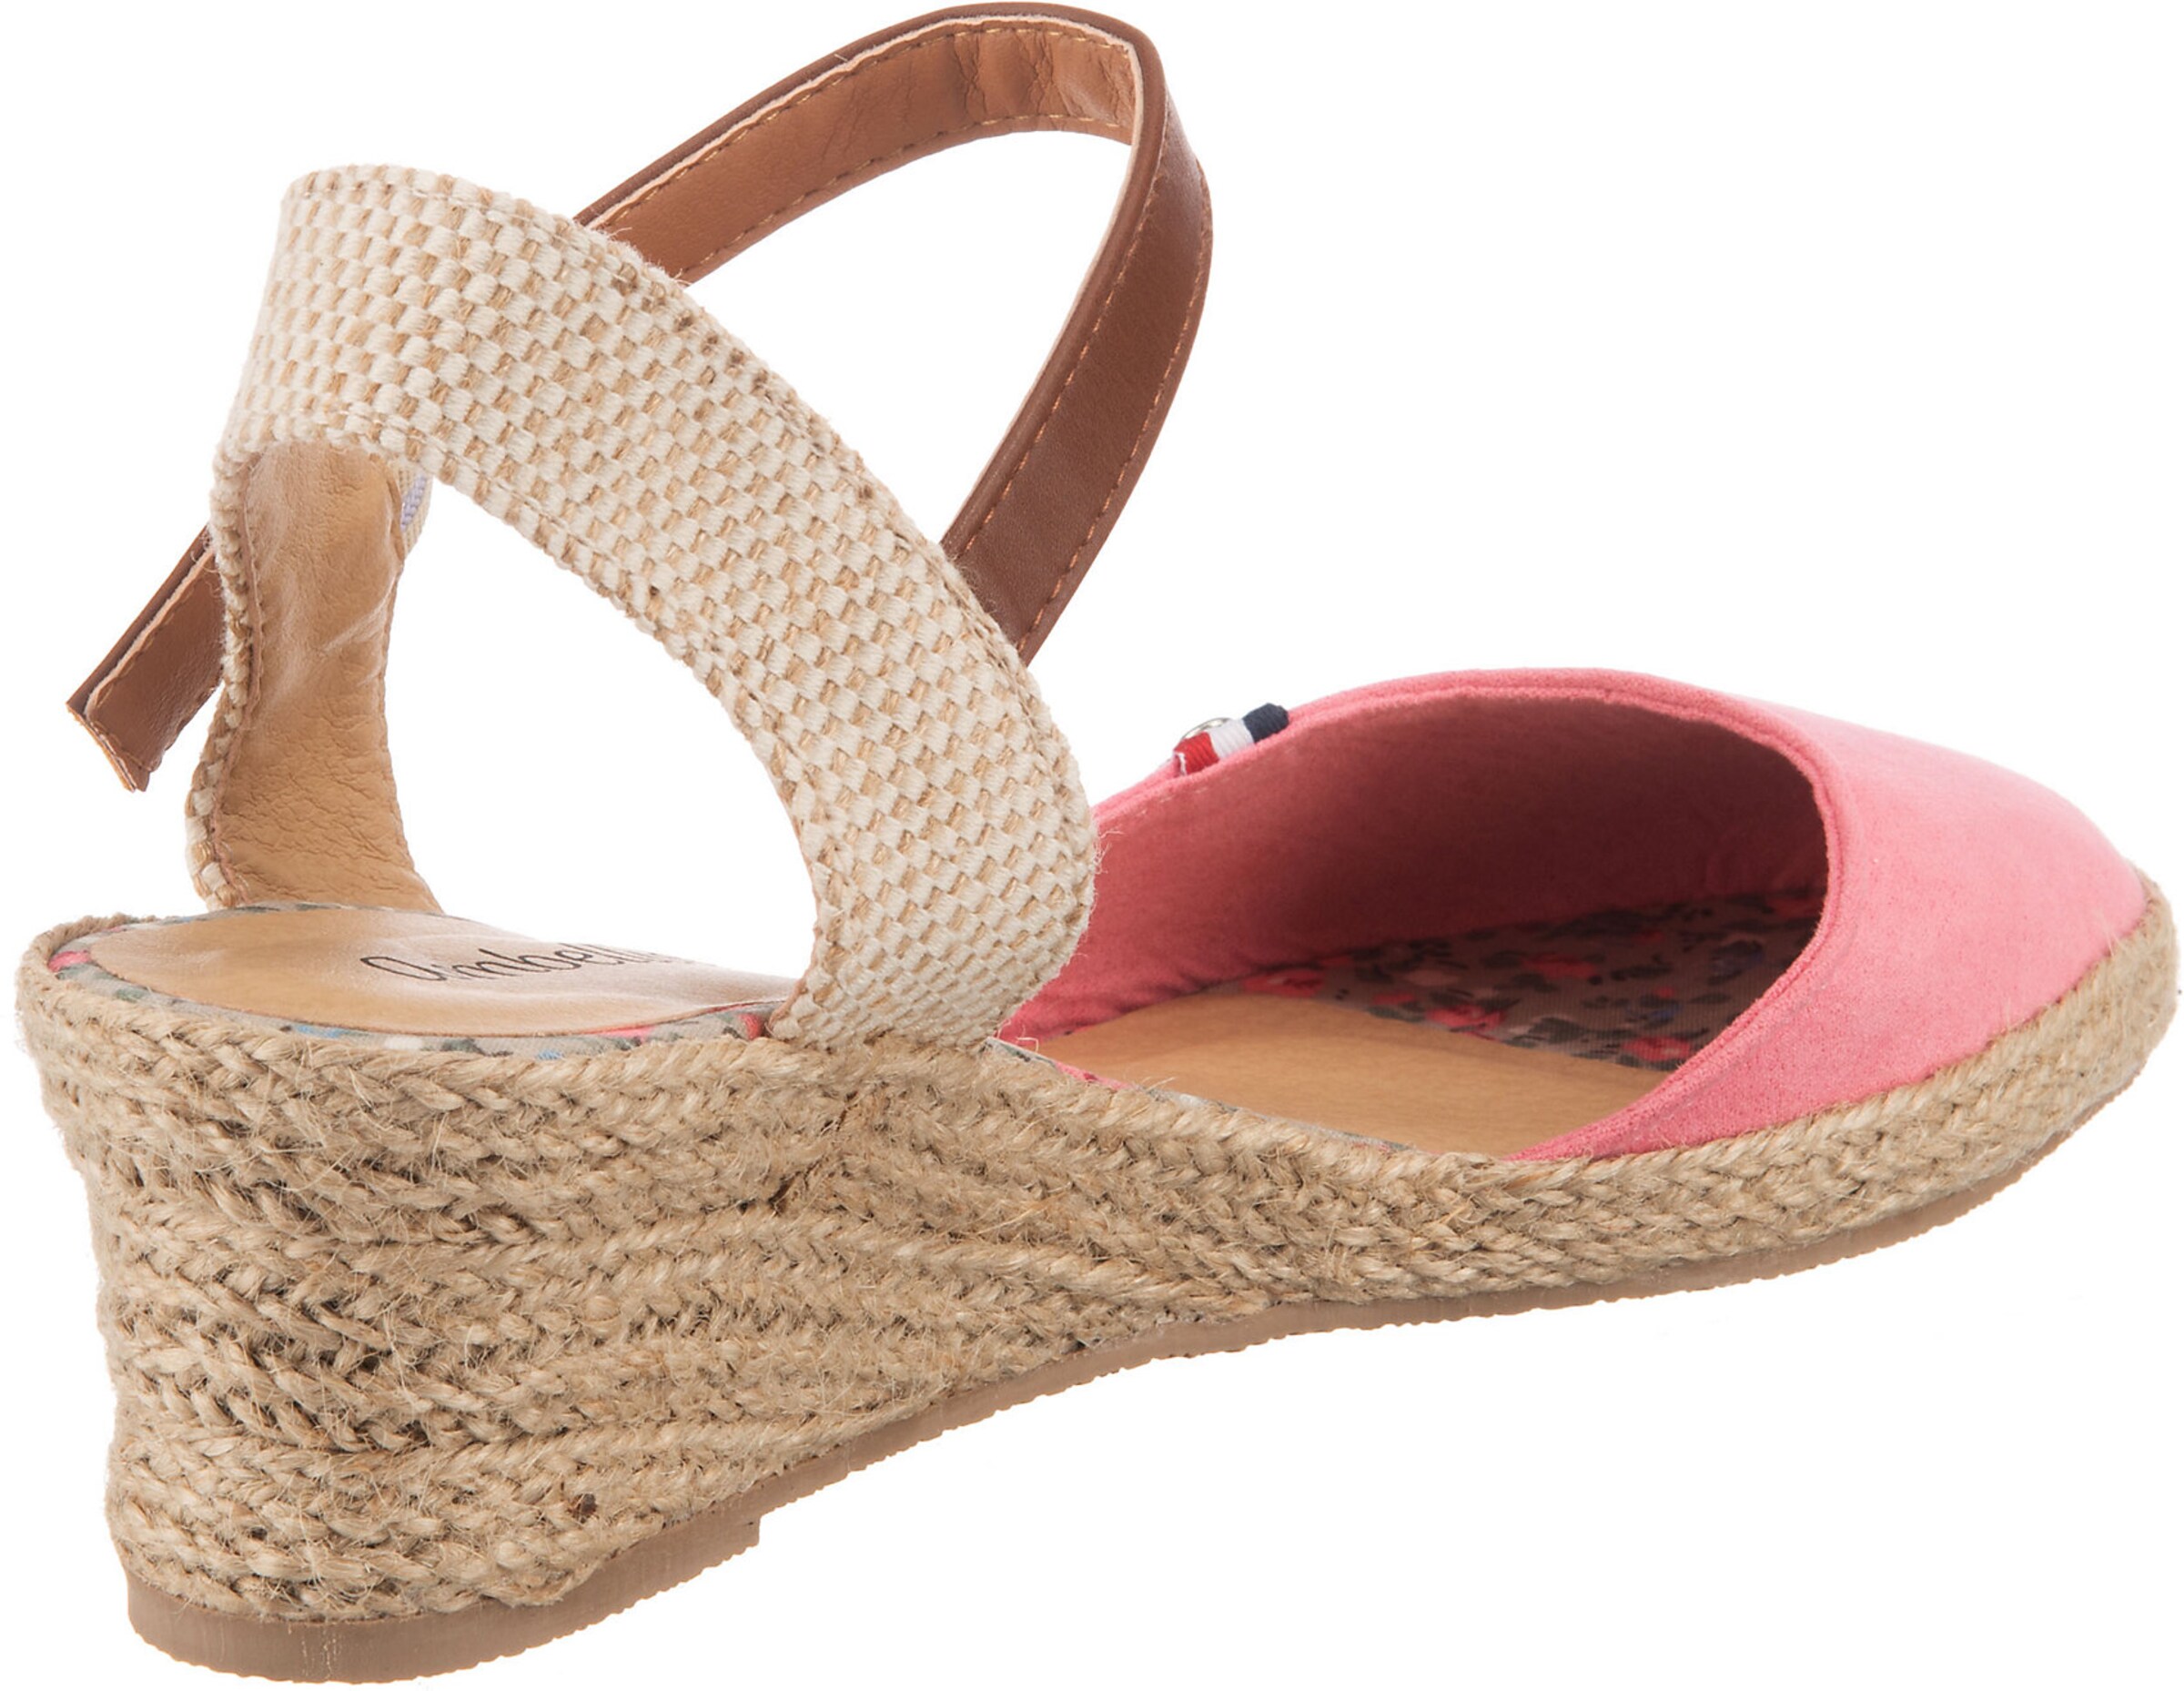 Frauen Sandalen ambellis Classic Sandalette mit Keilabsatz in Pink - MD14932